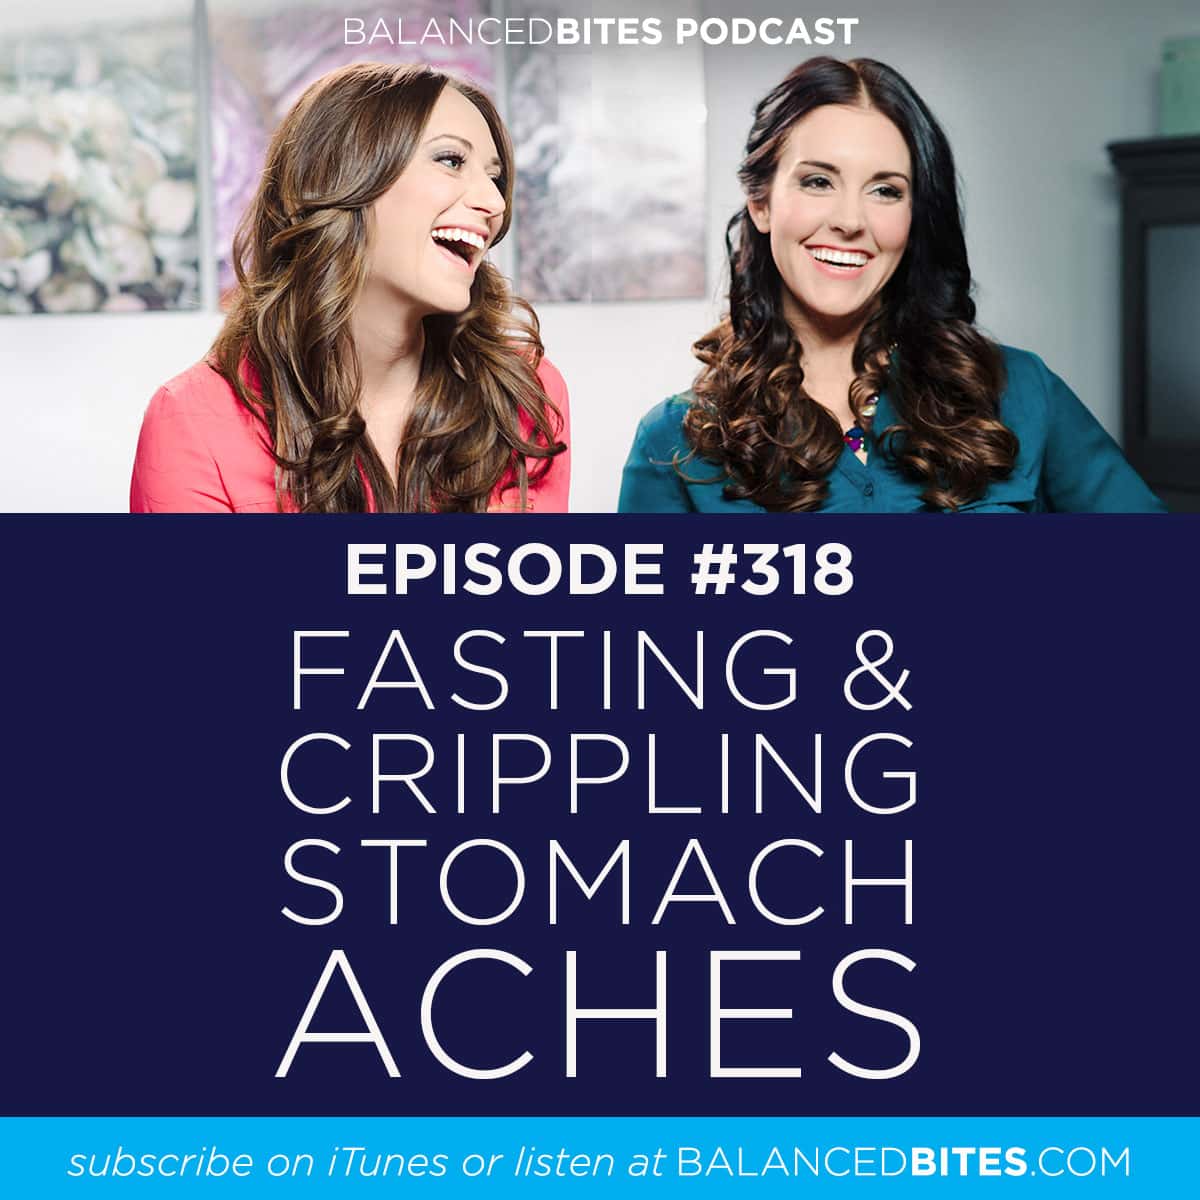 Diane Sanfilippo & Liz Wolfe | Balanced Bites Podcast | Fasting & Crippling Stomach Aches